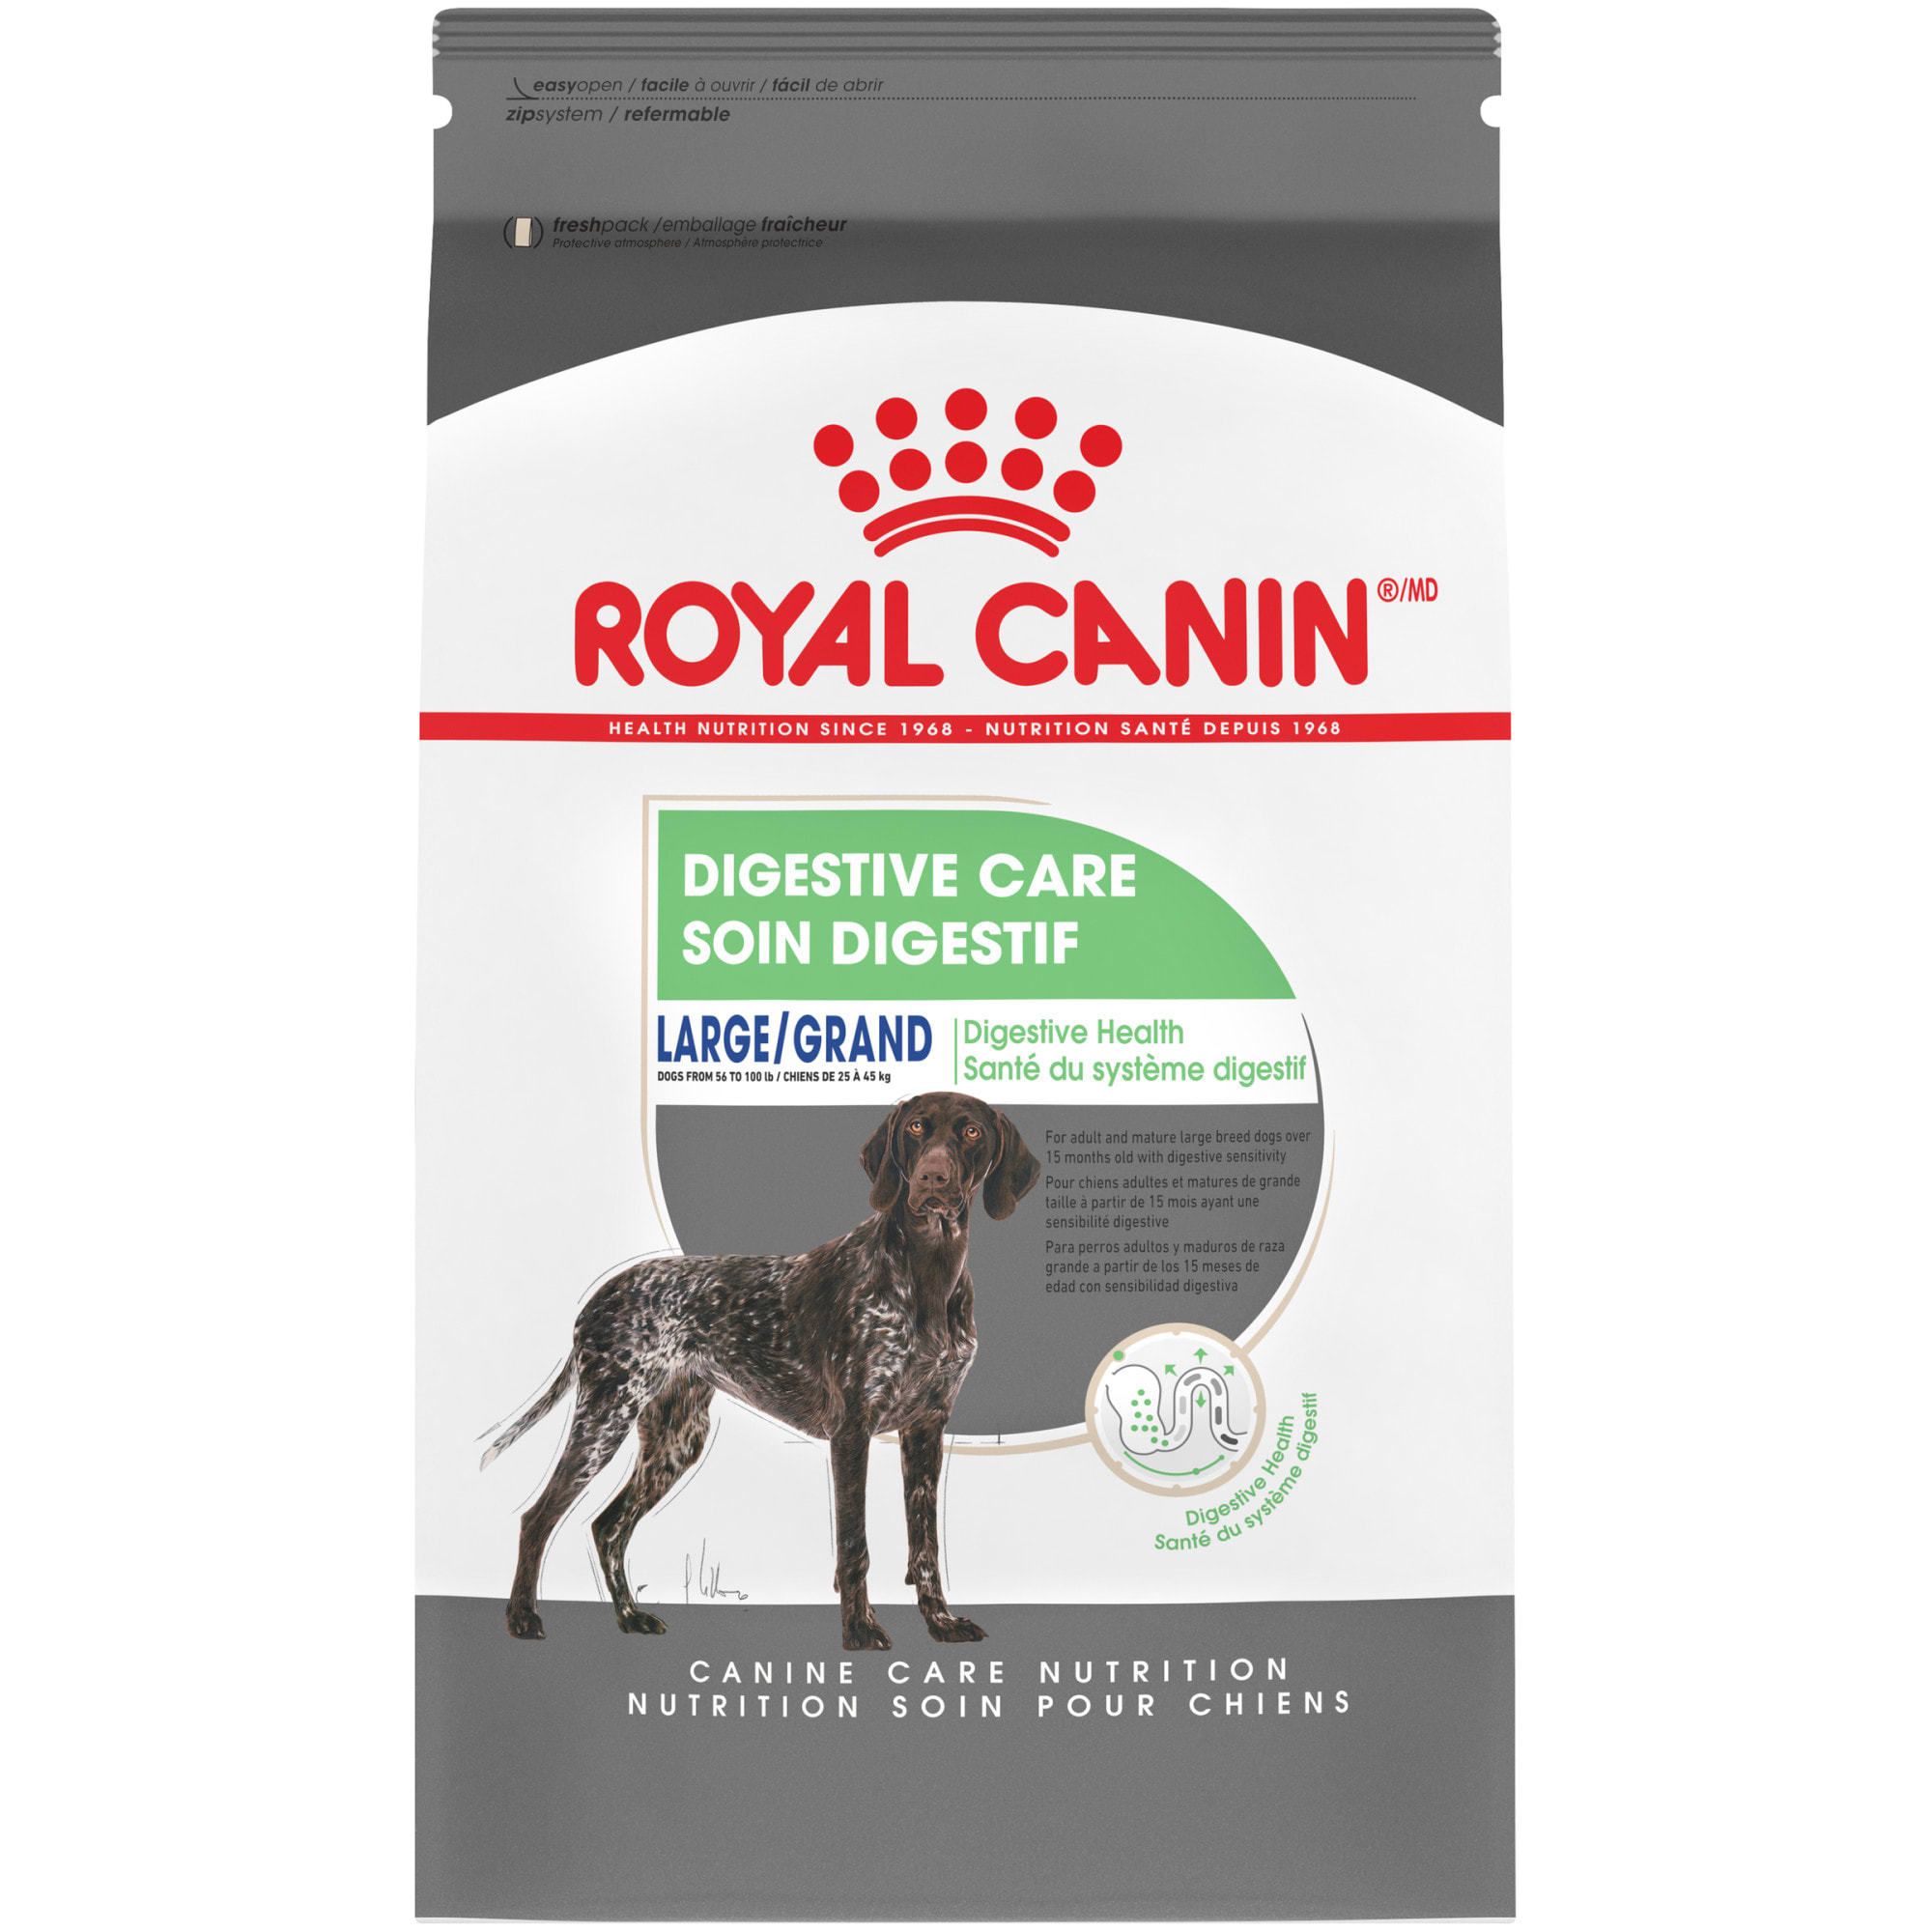 royal canin large adult dog food